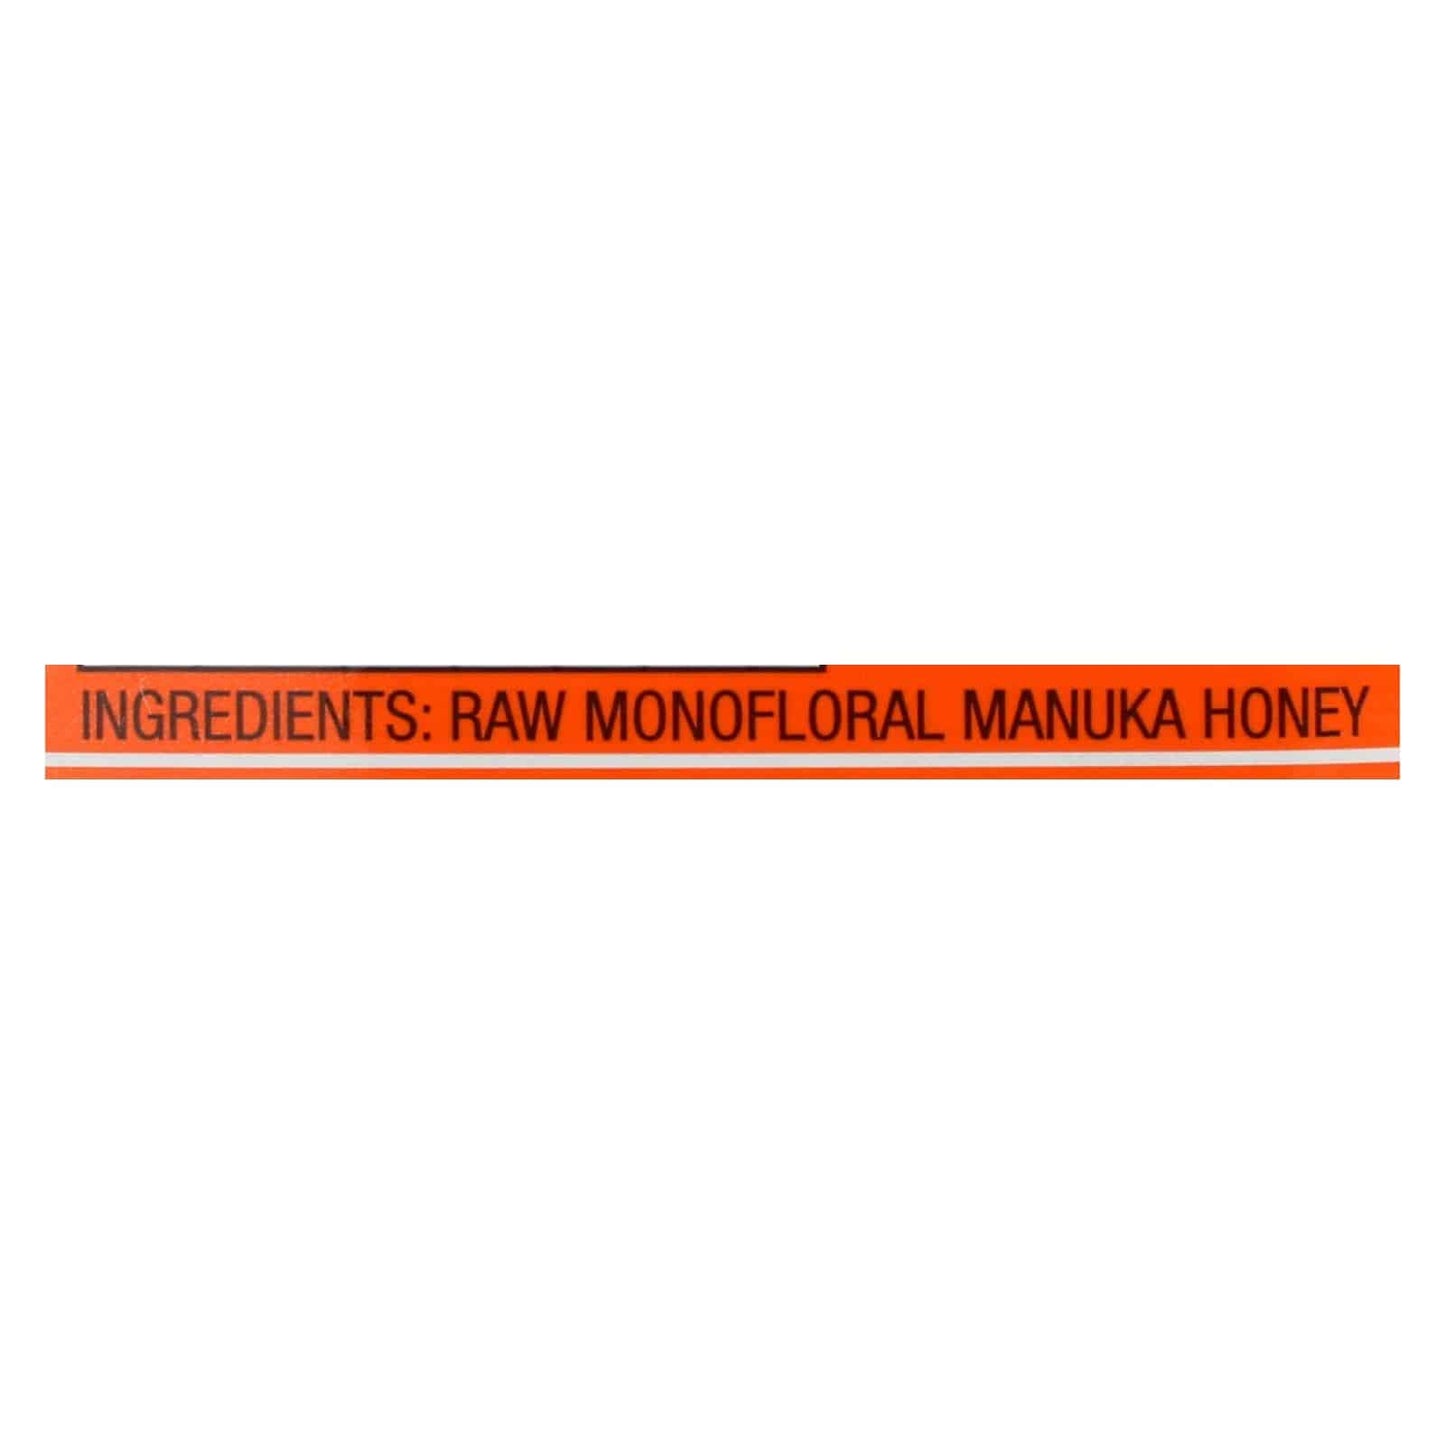 Wedderspoon Manuka Honey, Kfactor 16,  - Case Of 6 - 8.8 Oz | OnlyNaturals.us